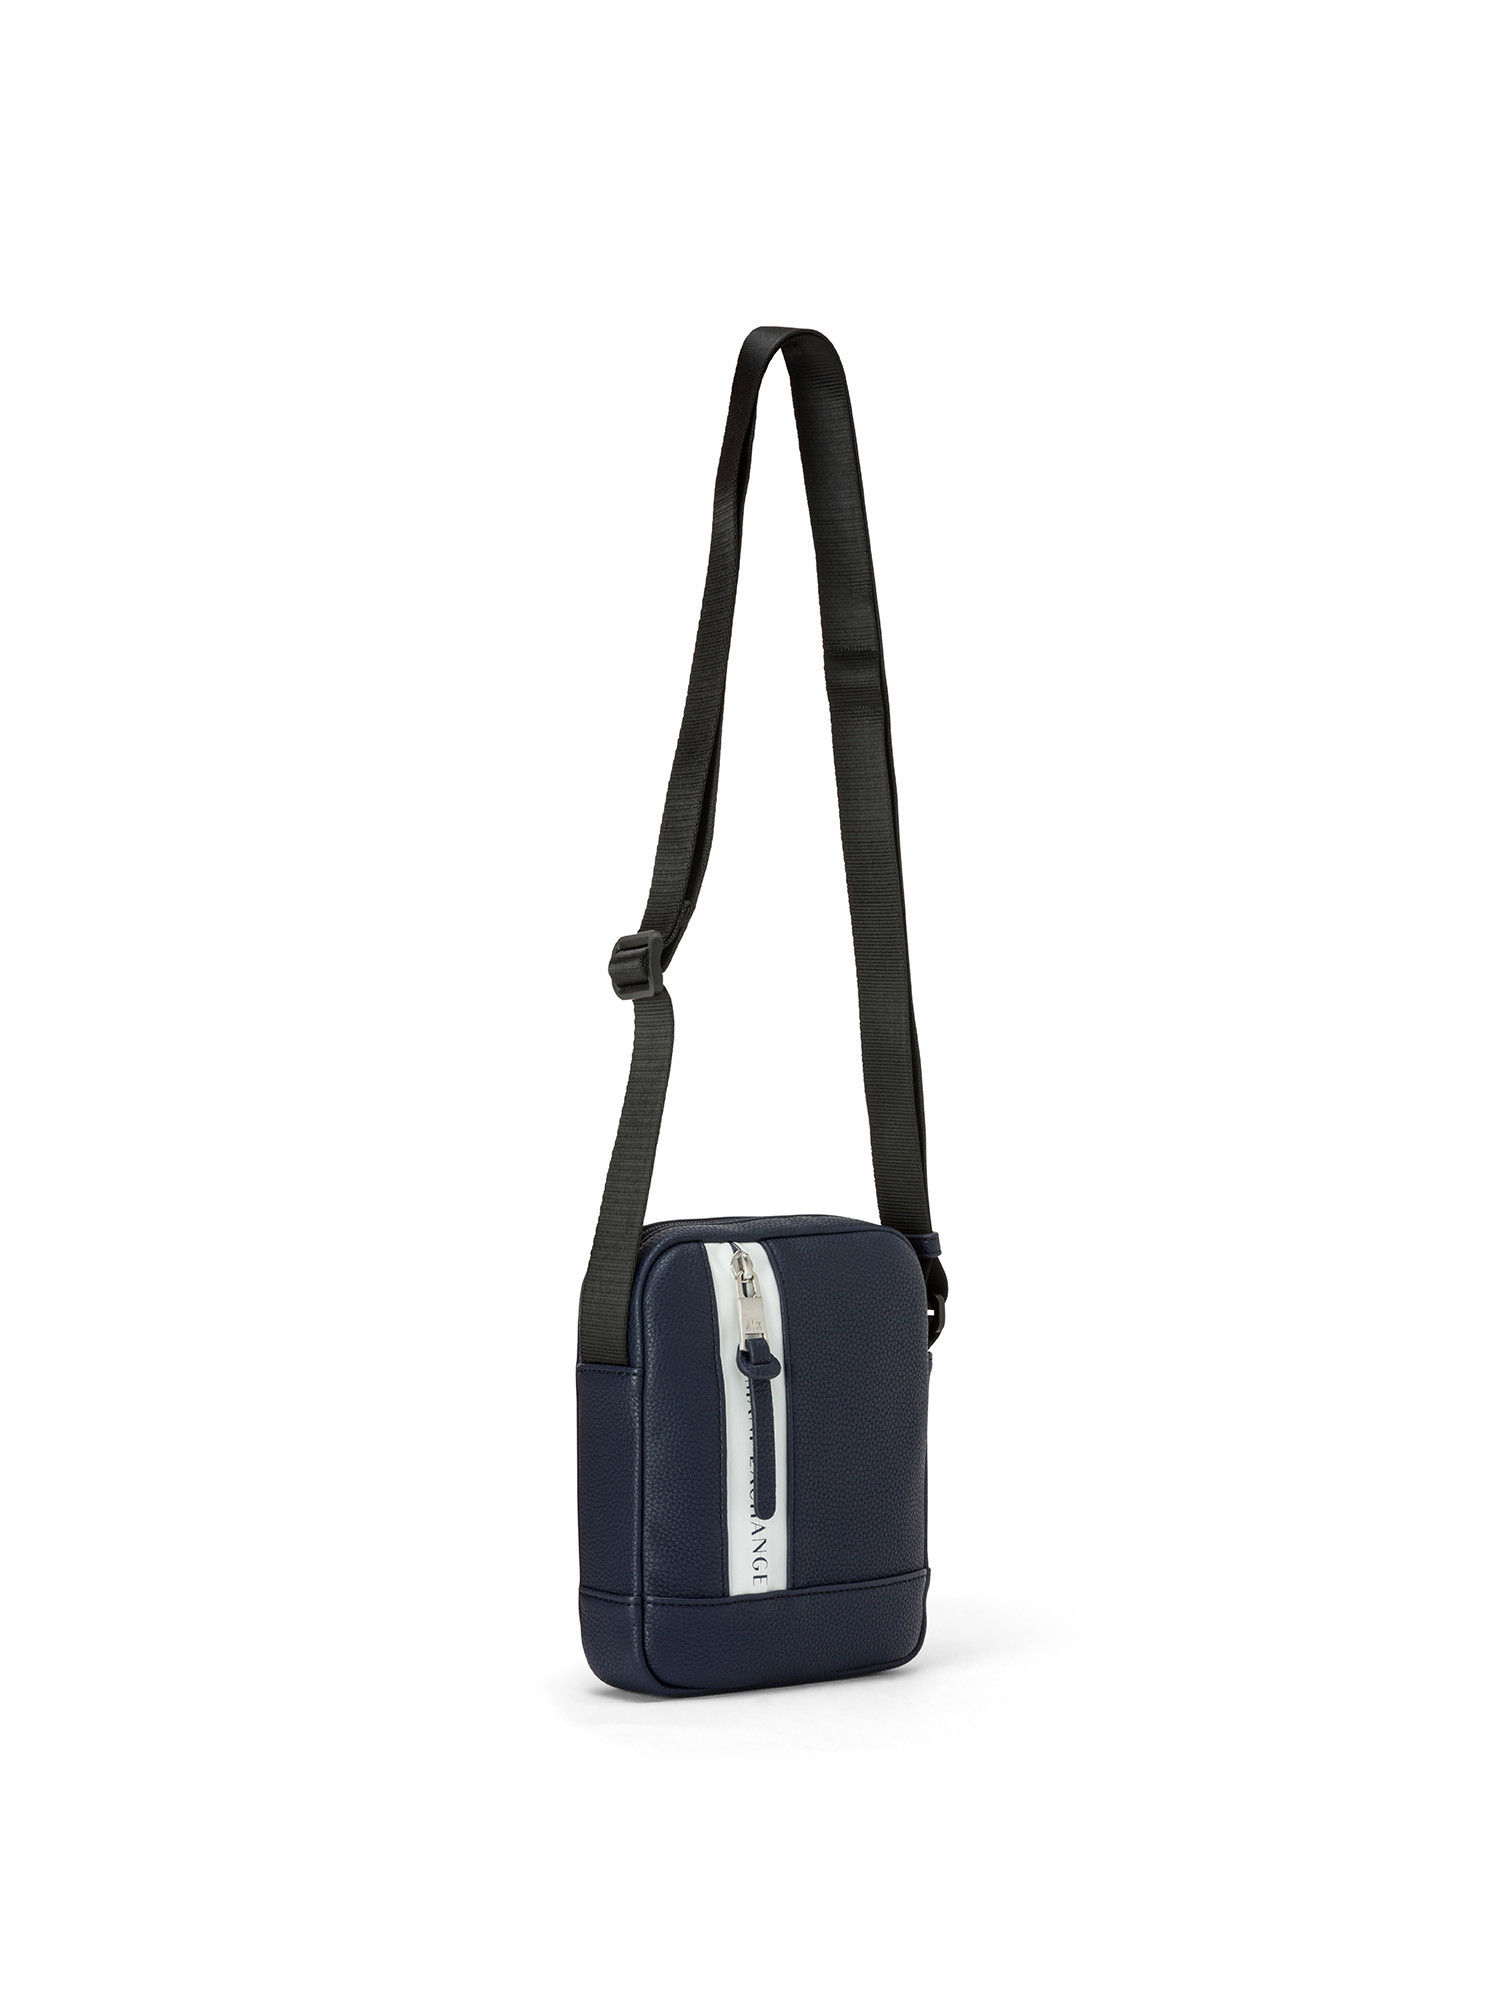 Armani Exchange - Bag with logo, Blue, large image number 1